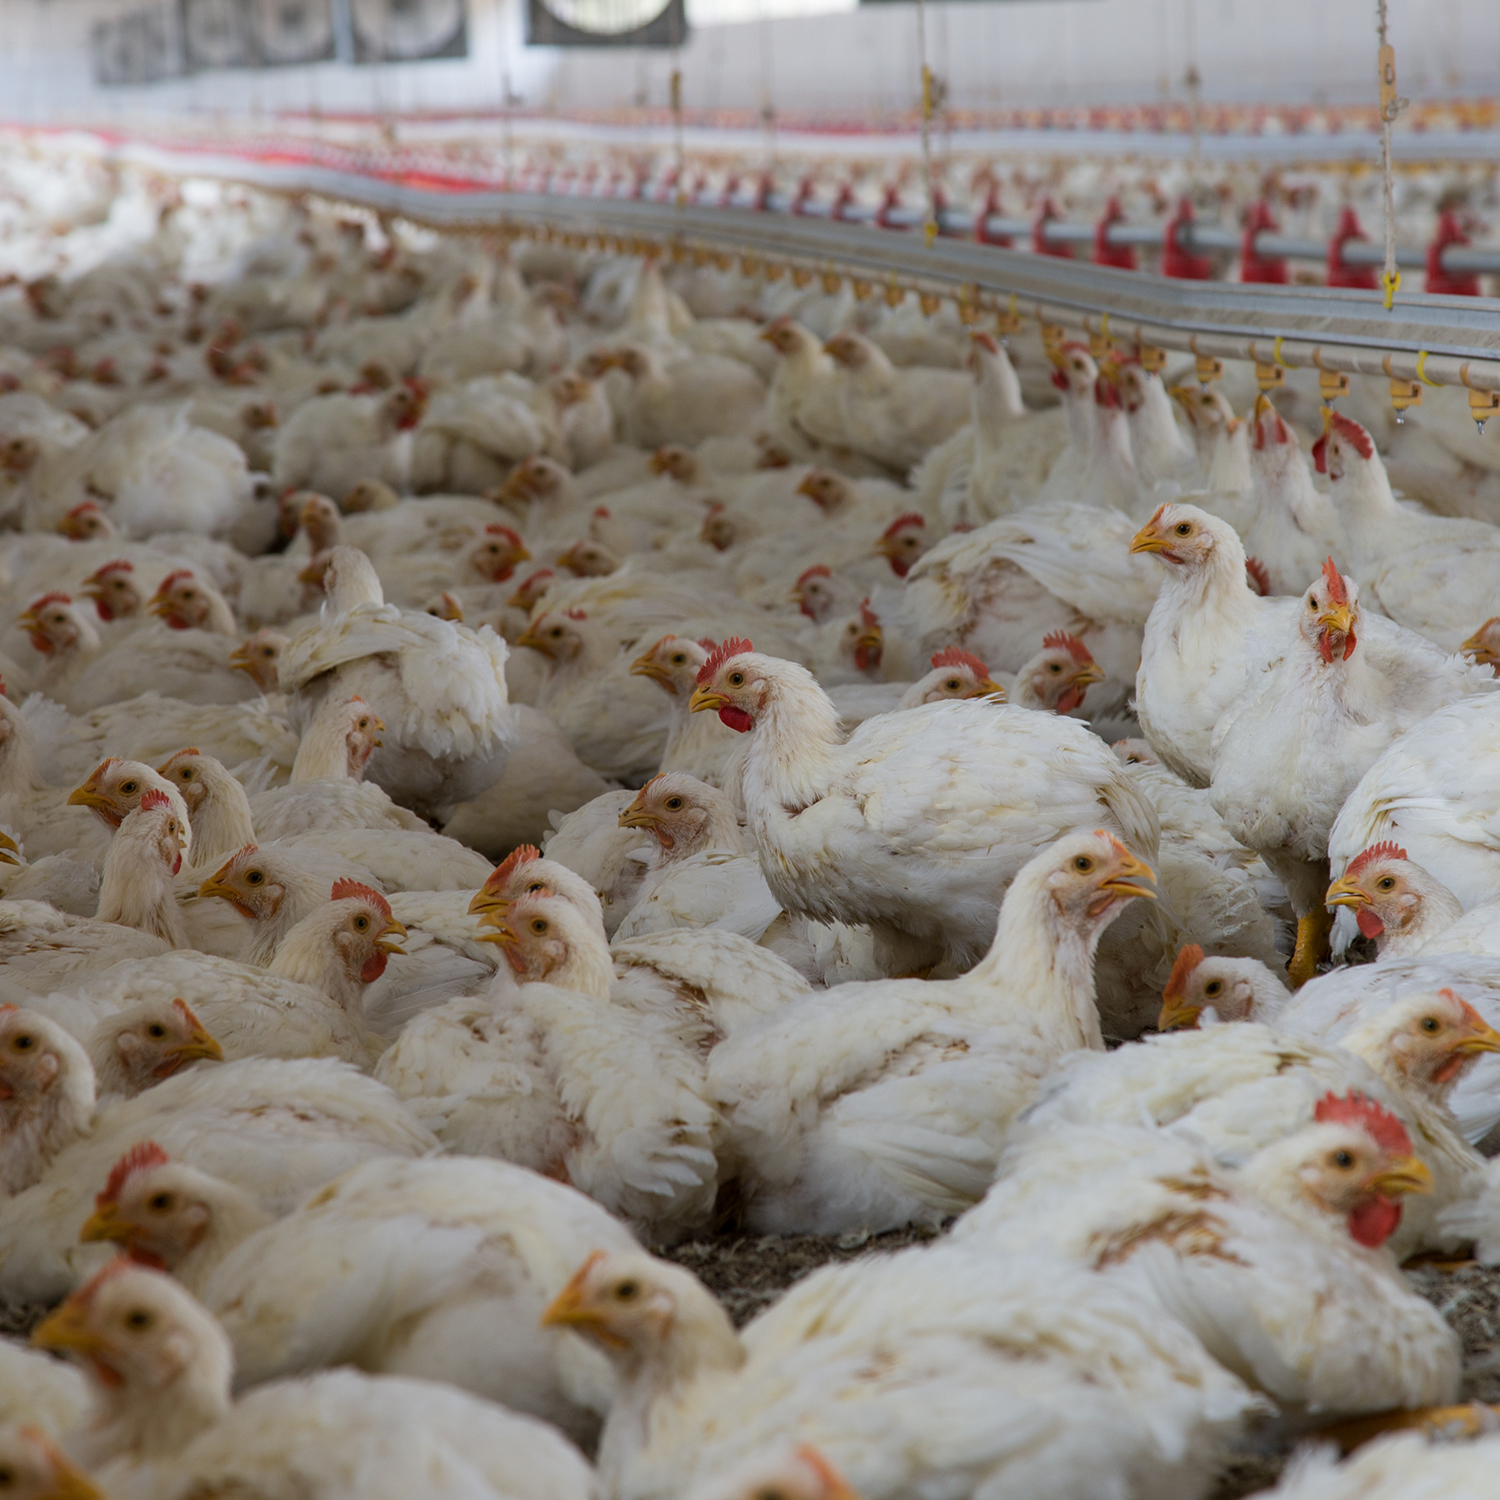 Animal Equality richtet Petition an EU-Parlament: Verbietet schnell wachsende Hühner!